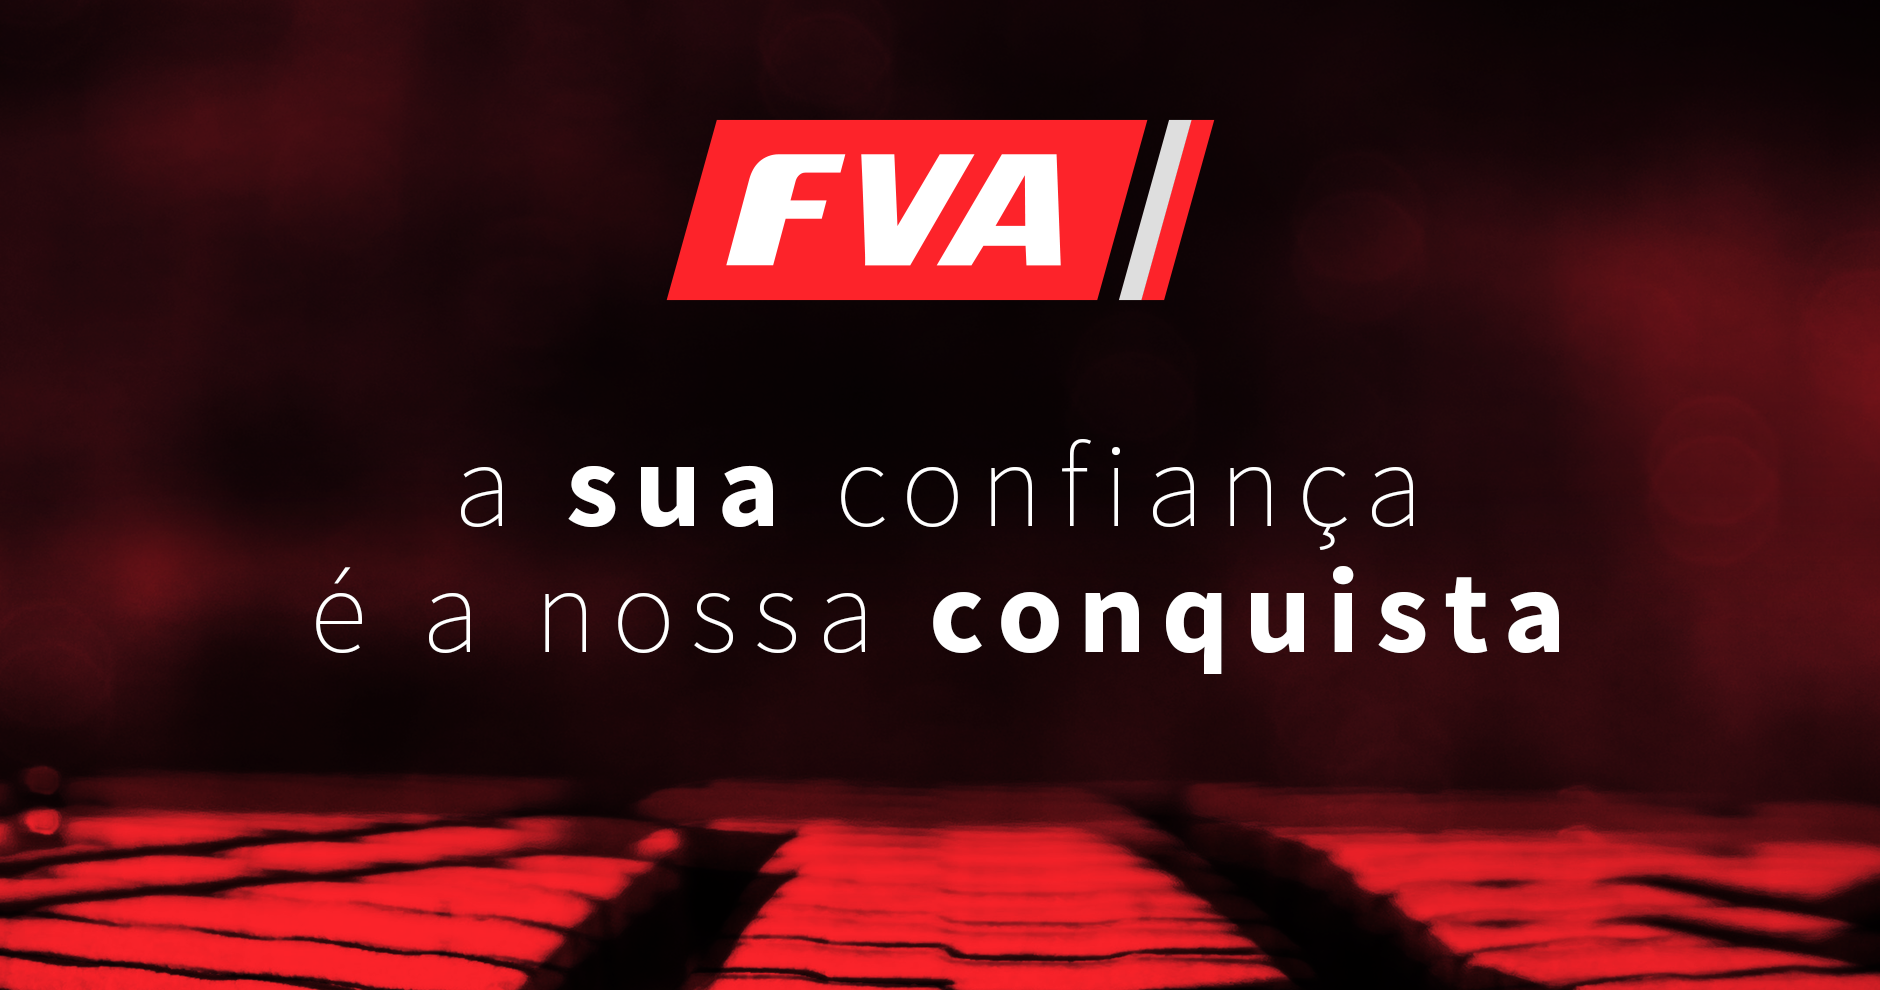 (c) Fvars.com.br